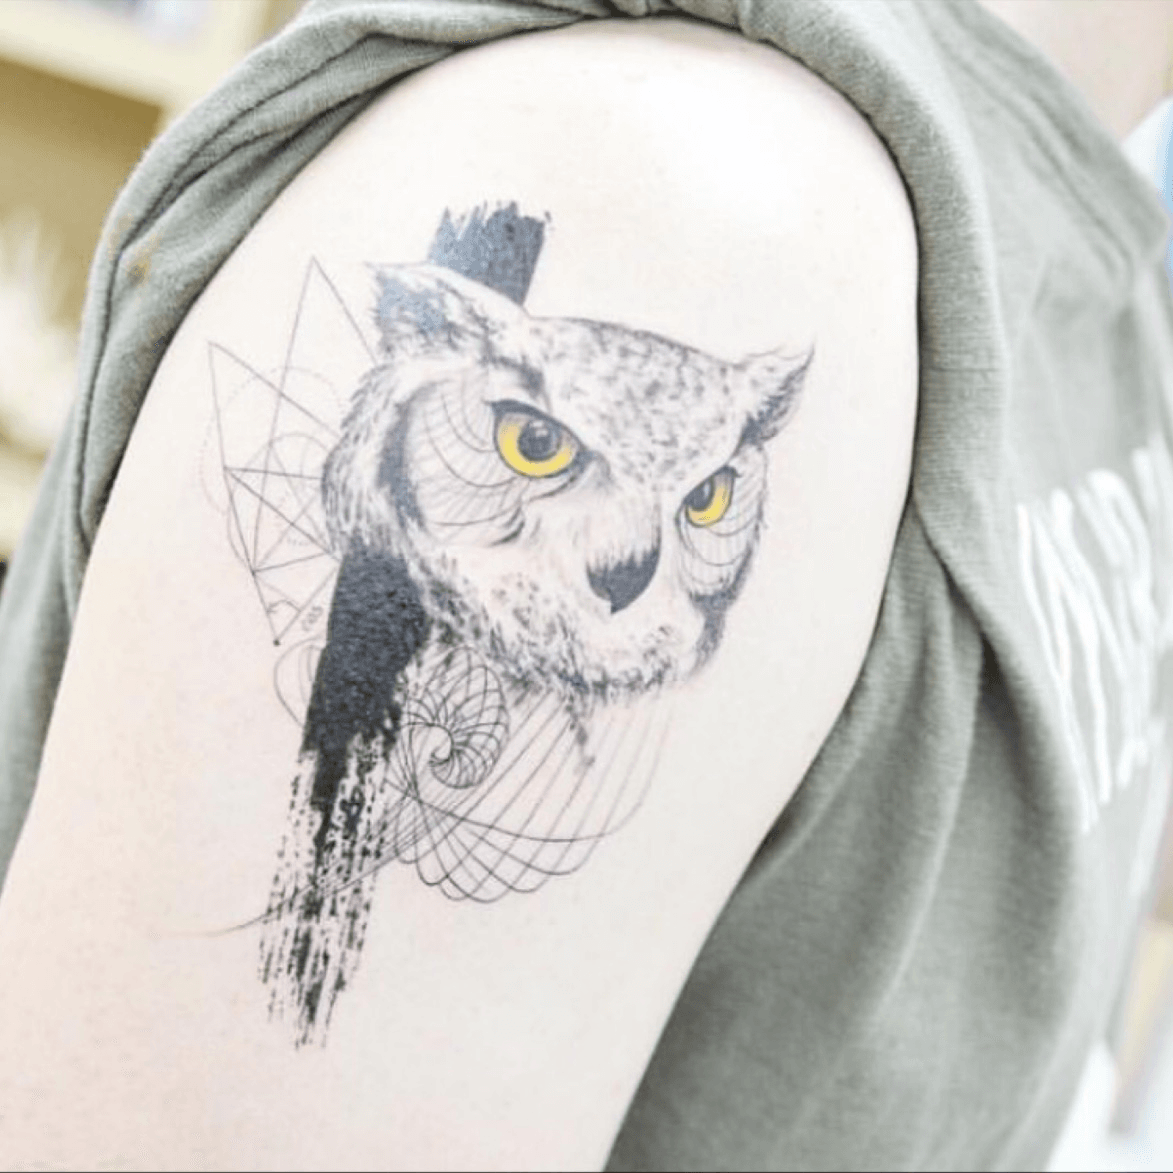 Badass owl tattoos